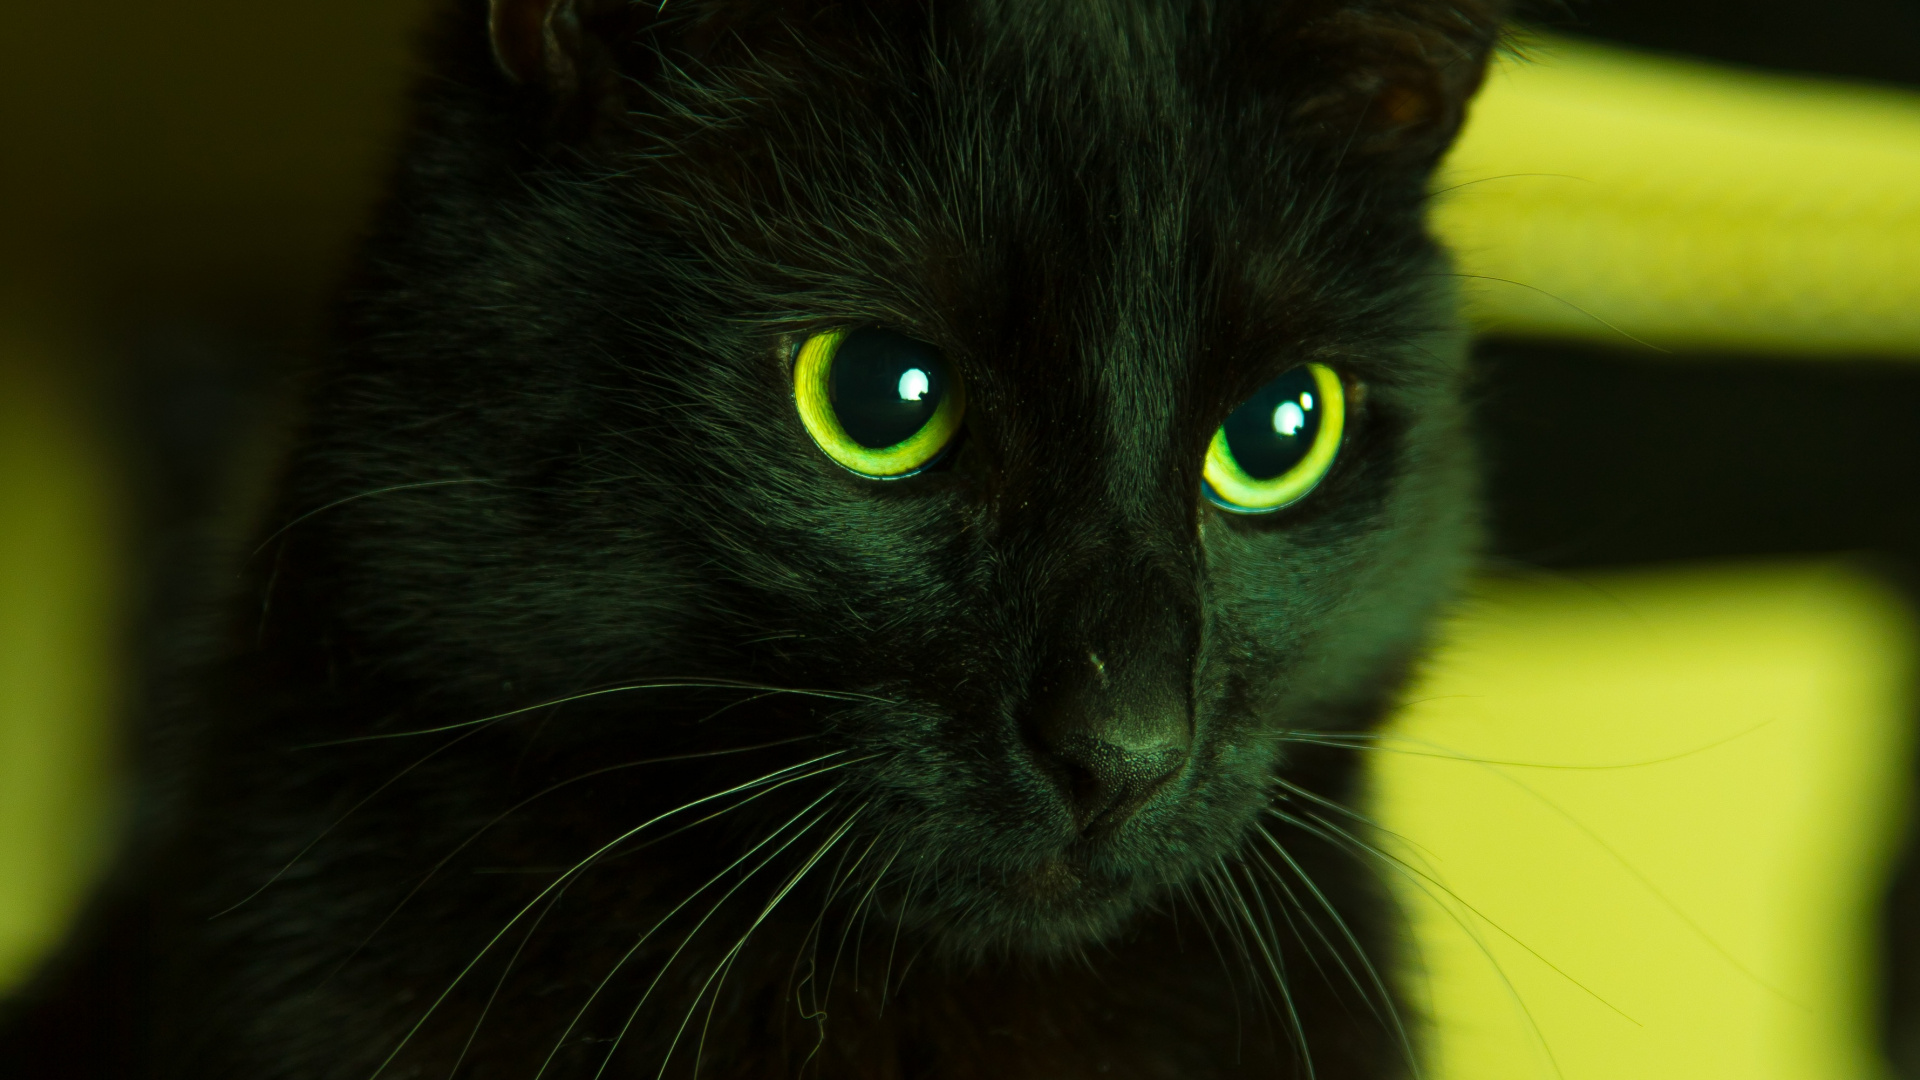 Black Cat in Tilt Shift Lens. Wallpaper in 1920x1080 Resolution